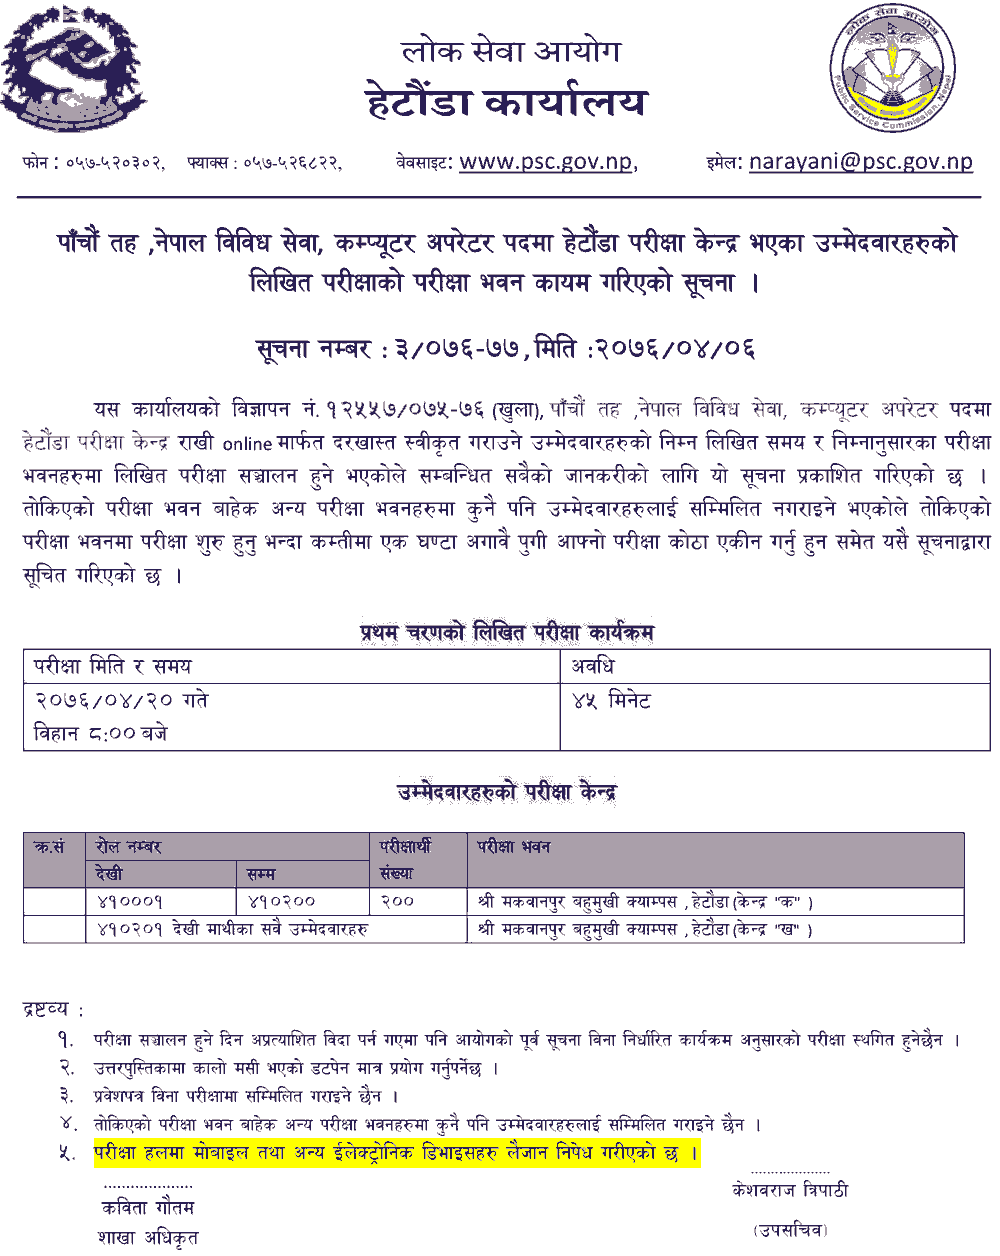 Local Level Computer Operator 5th Level Written Examination - Hetauda